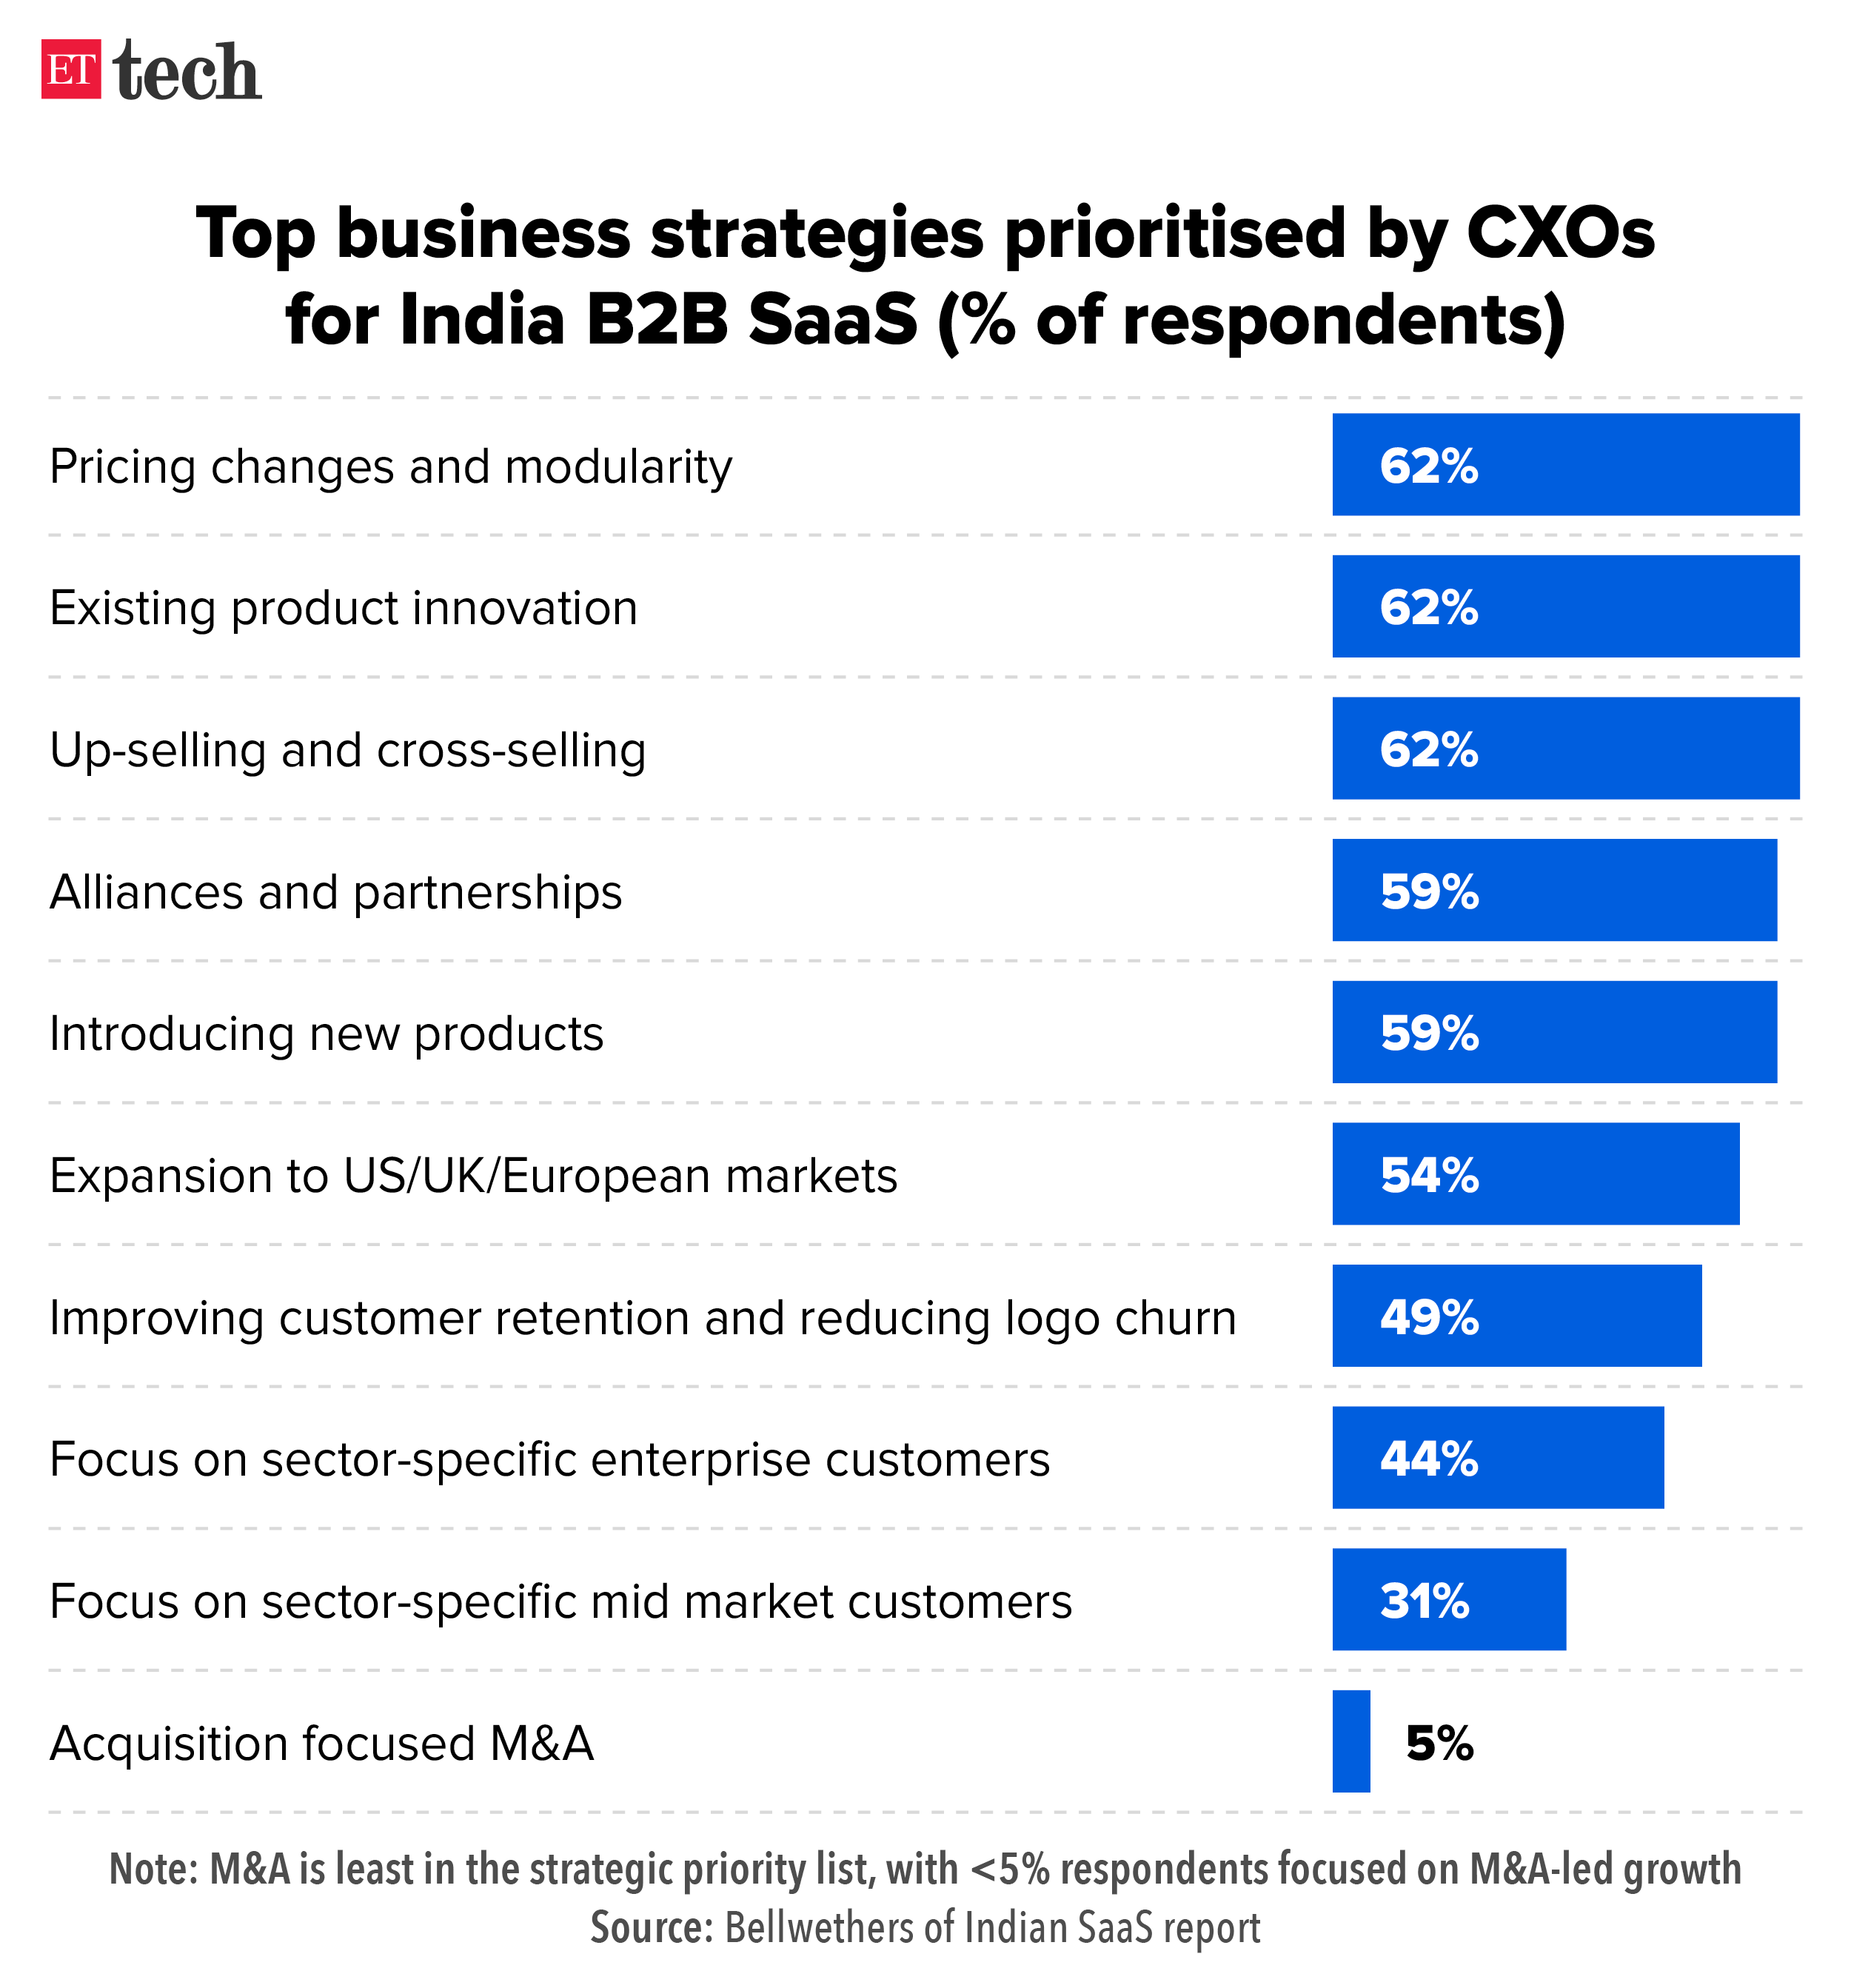 Top business strategies prioritised by CXOs for India B2B SaaS